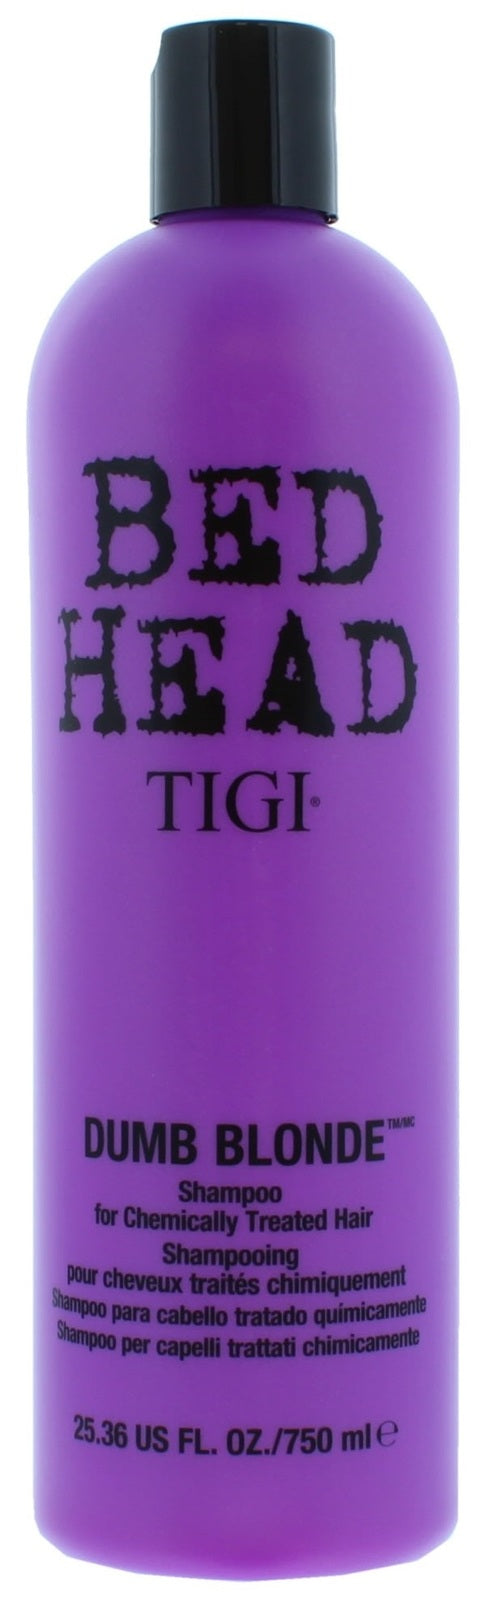 Tigi Bed Head: Shampoo Dumb Blonde For Chemically Treated Hair (750ml)